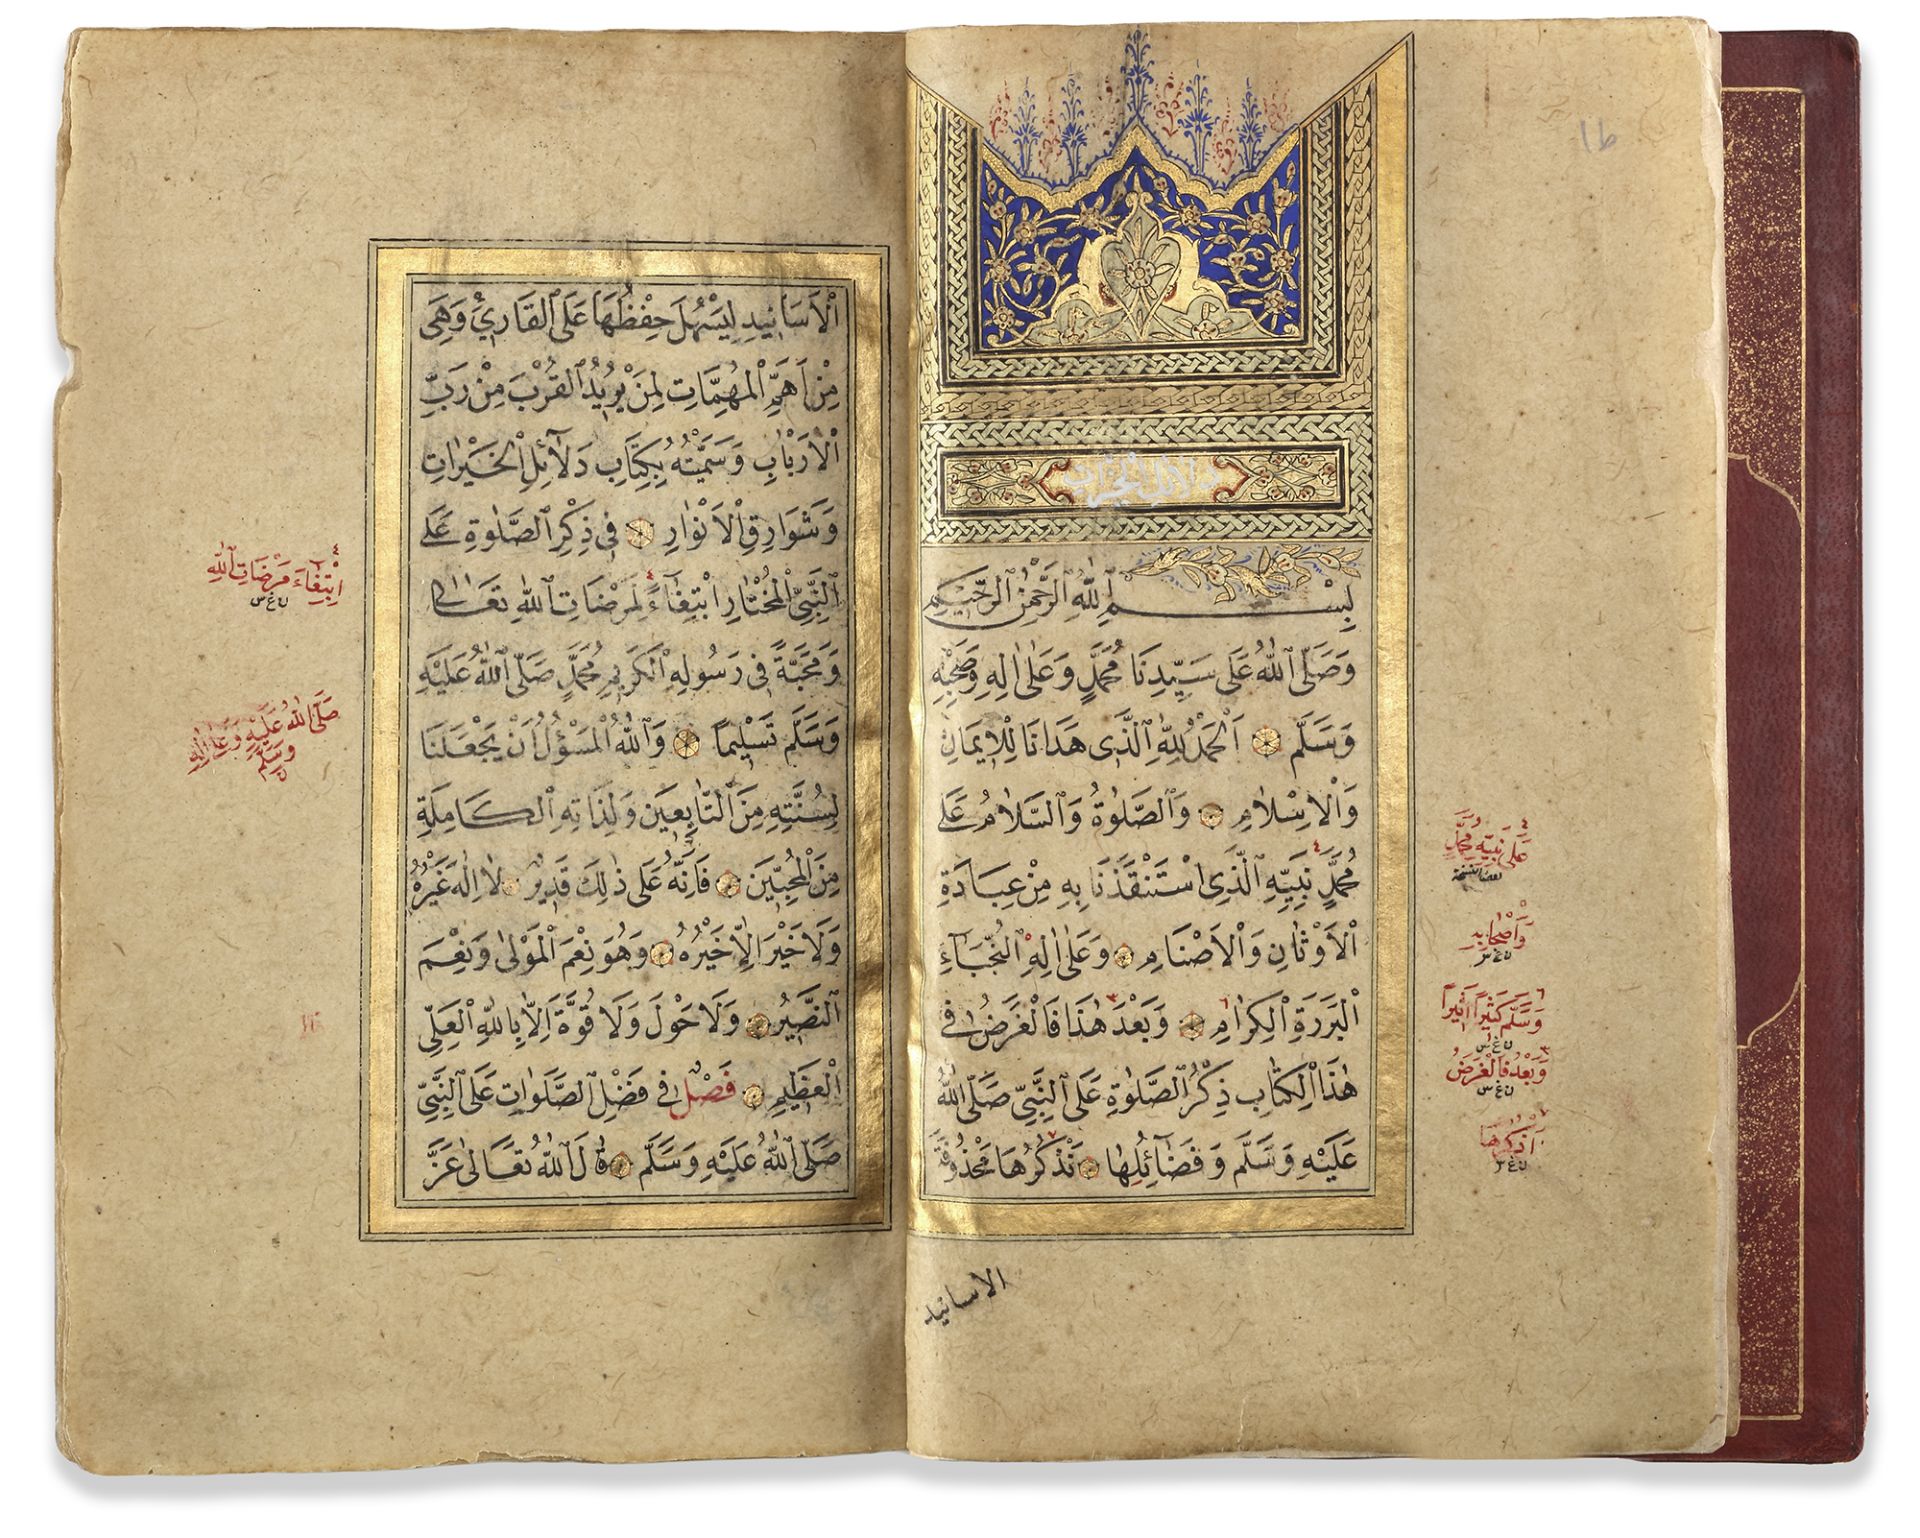 DALA'IL AL-KHAYRAT BY MUHAMMAD BIN SULAYMAN AL-JAZULI (D. 1465 AD), SIGNED HASAN VASFI EFENDI, OTTOM